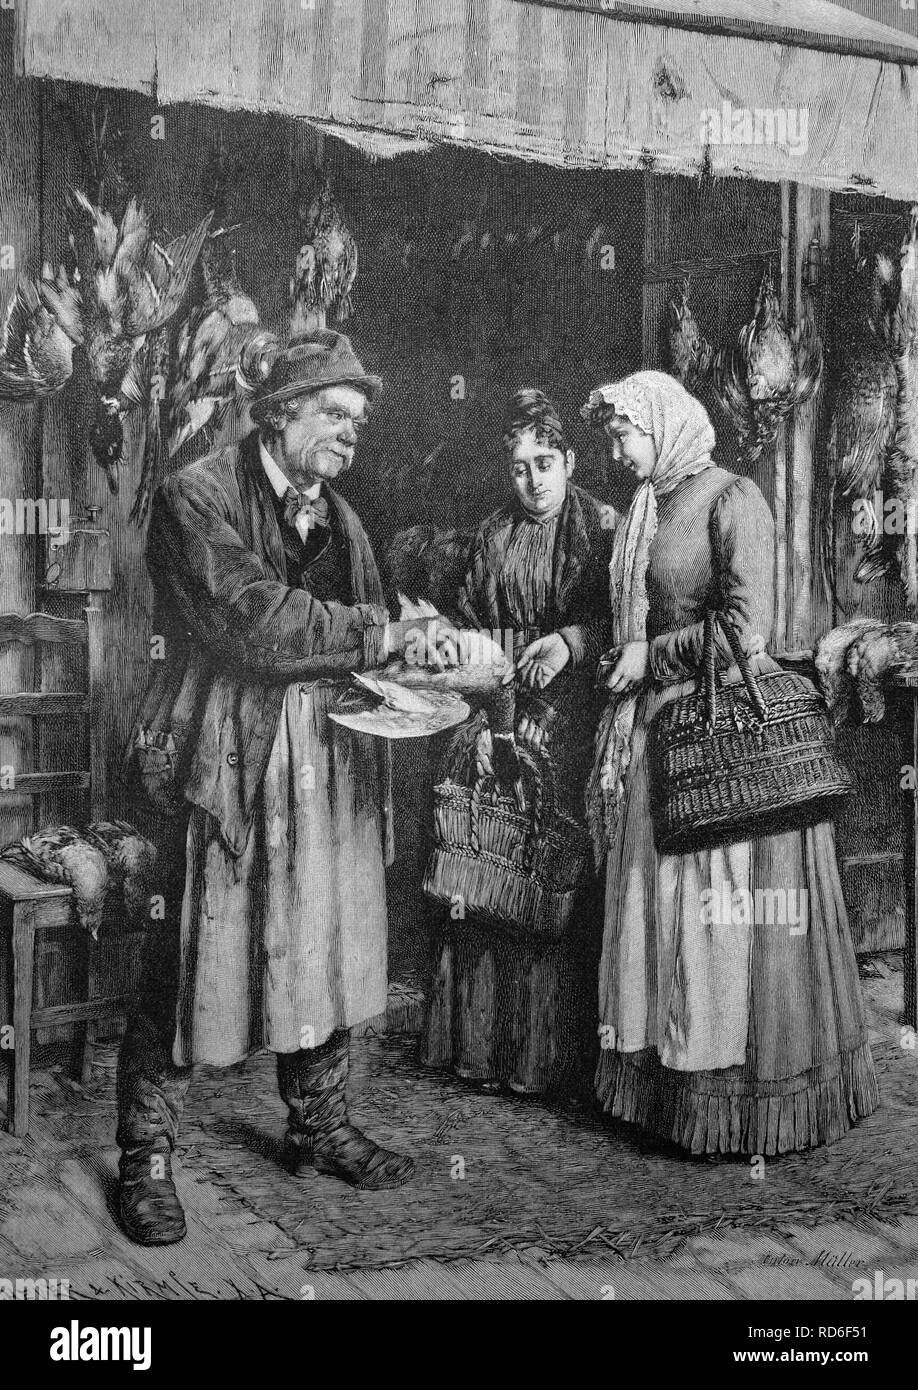 Poultry dealer, historical illustration, ca. 1893 Stock Photo